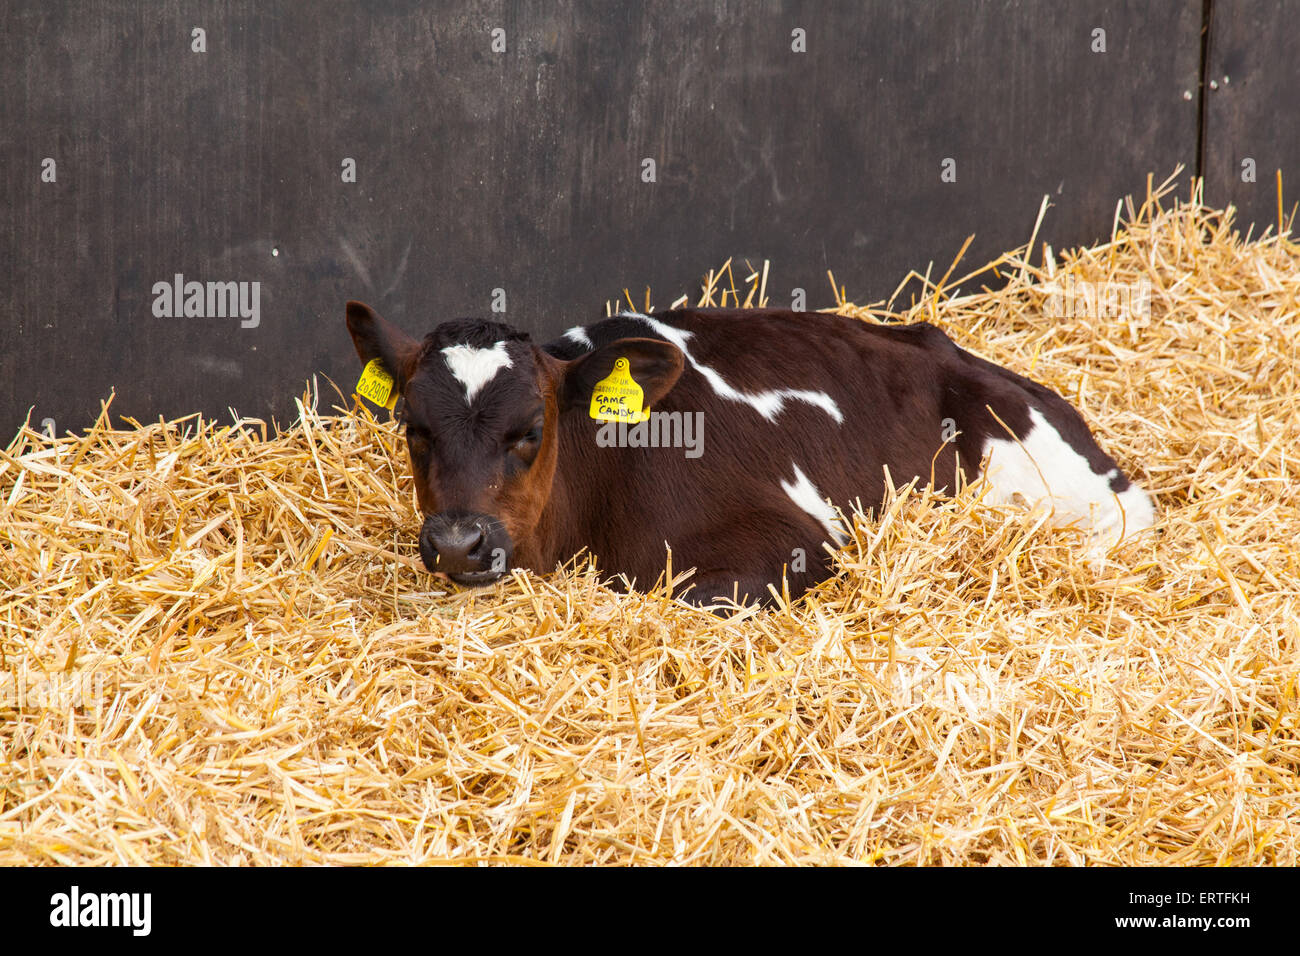 Eight week old dairy calves at Cheriton Middle Farm, Cheriton, Hampshire, England, United Kingdom. Stock Photo